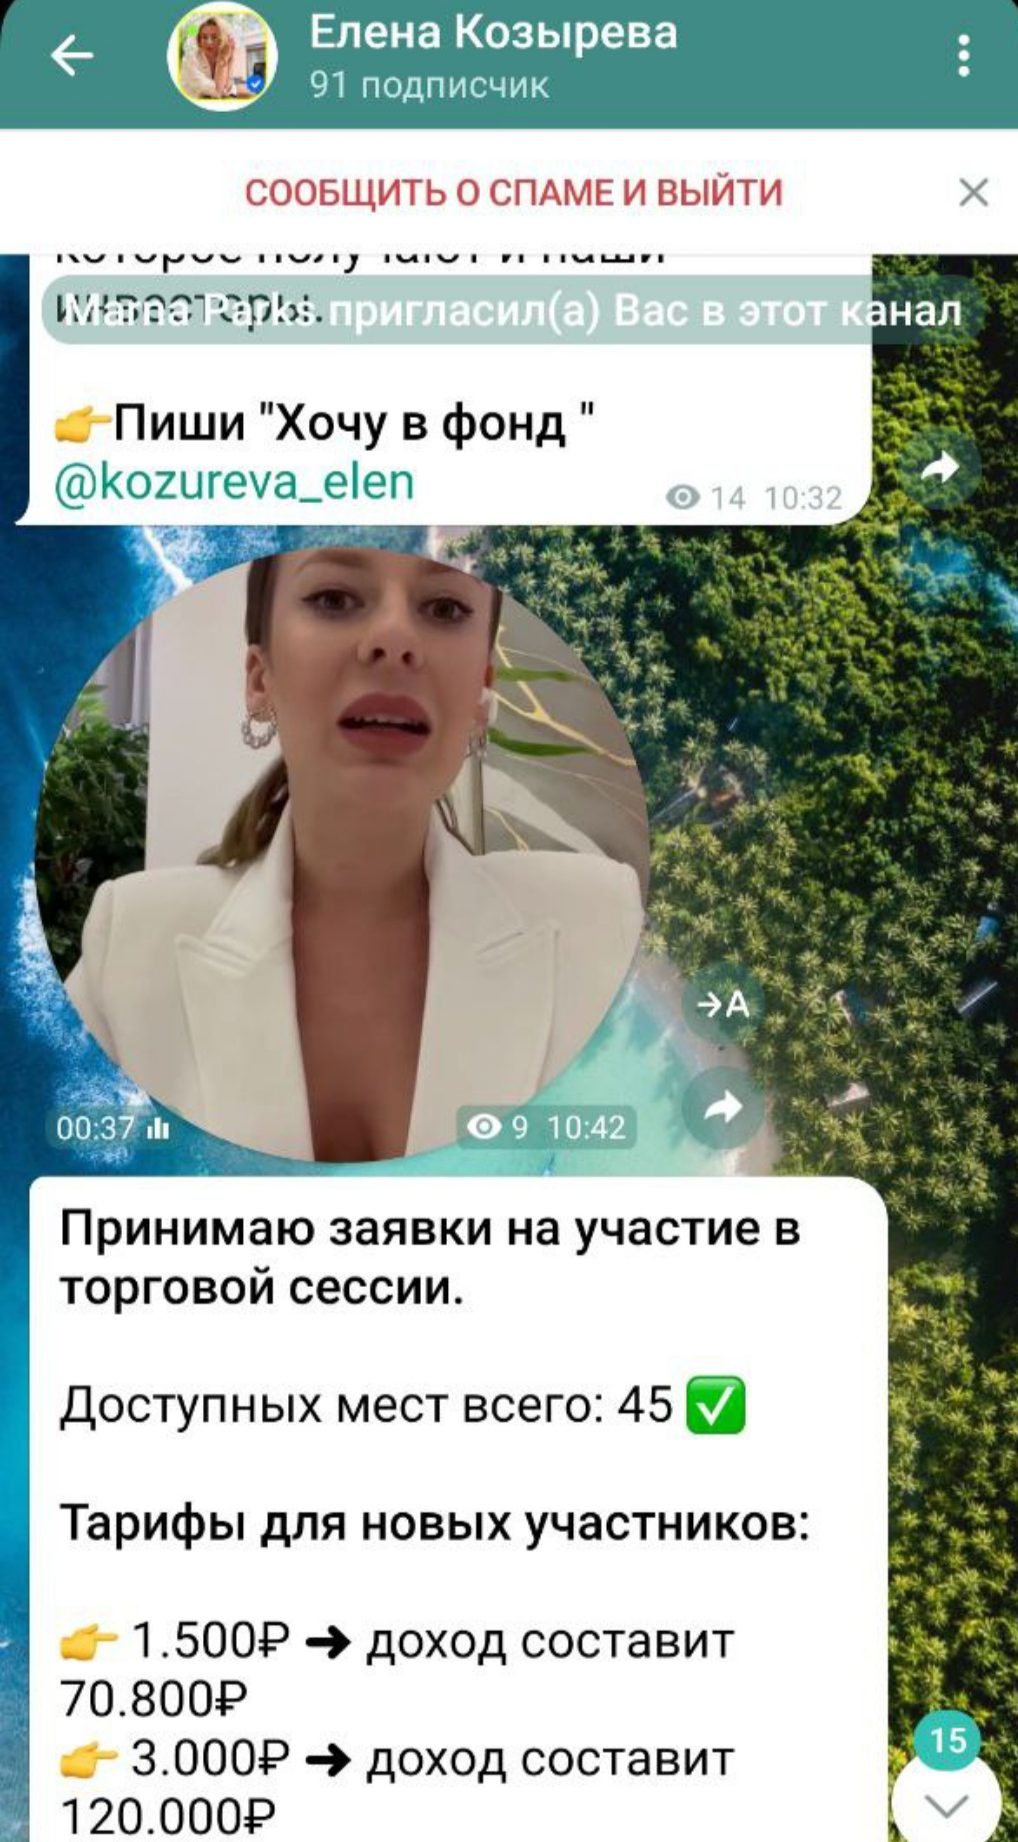 Елена Козырева телеграмм